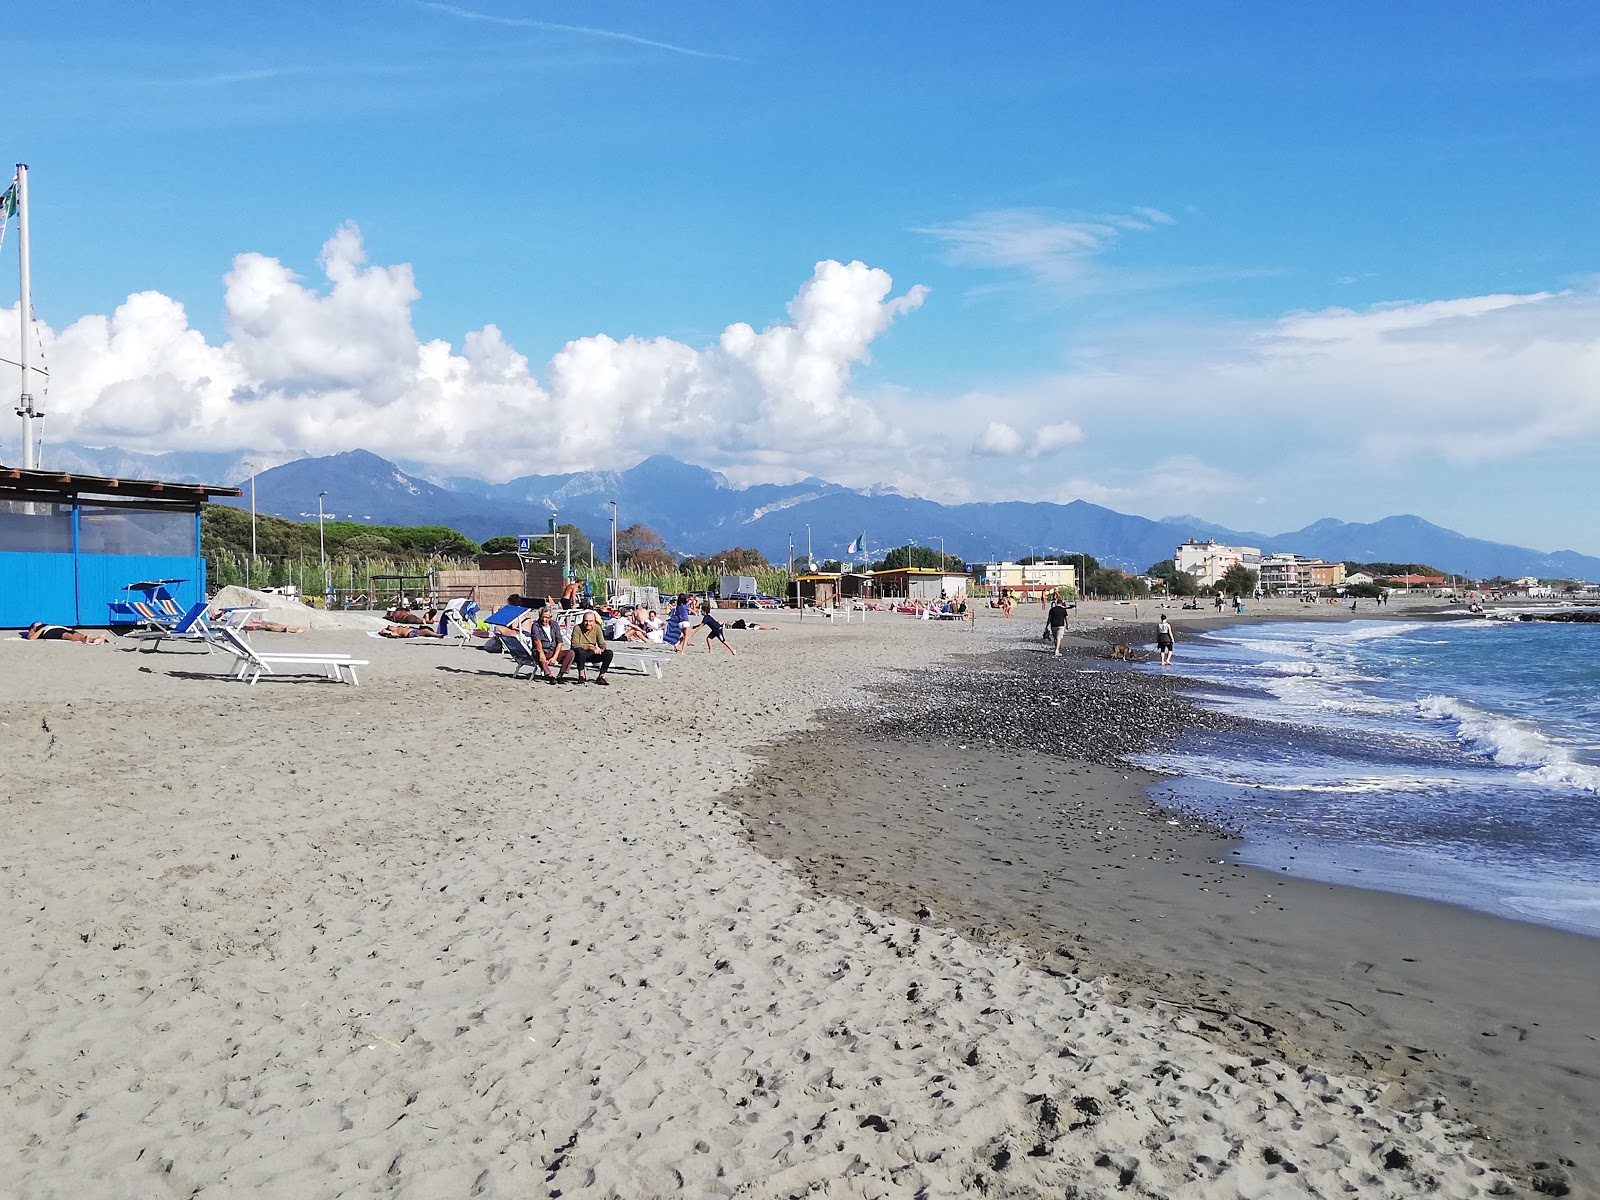 Foto de Spiaggia di Marinella di Sarzana - lugar popular entre los conocedores del relax